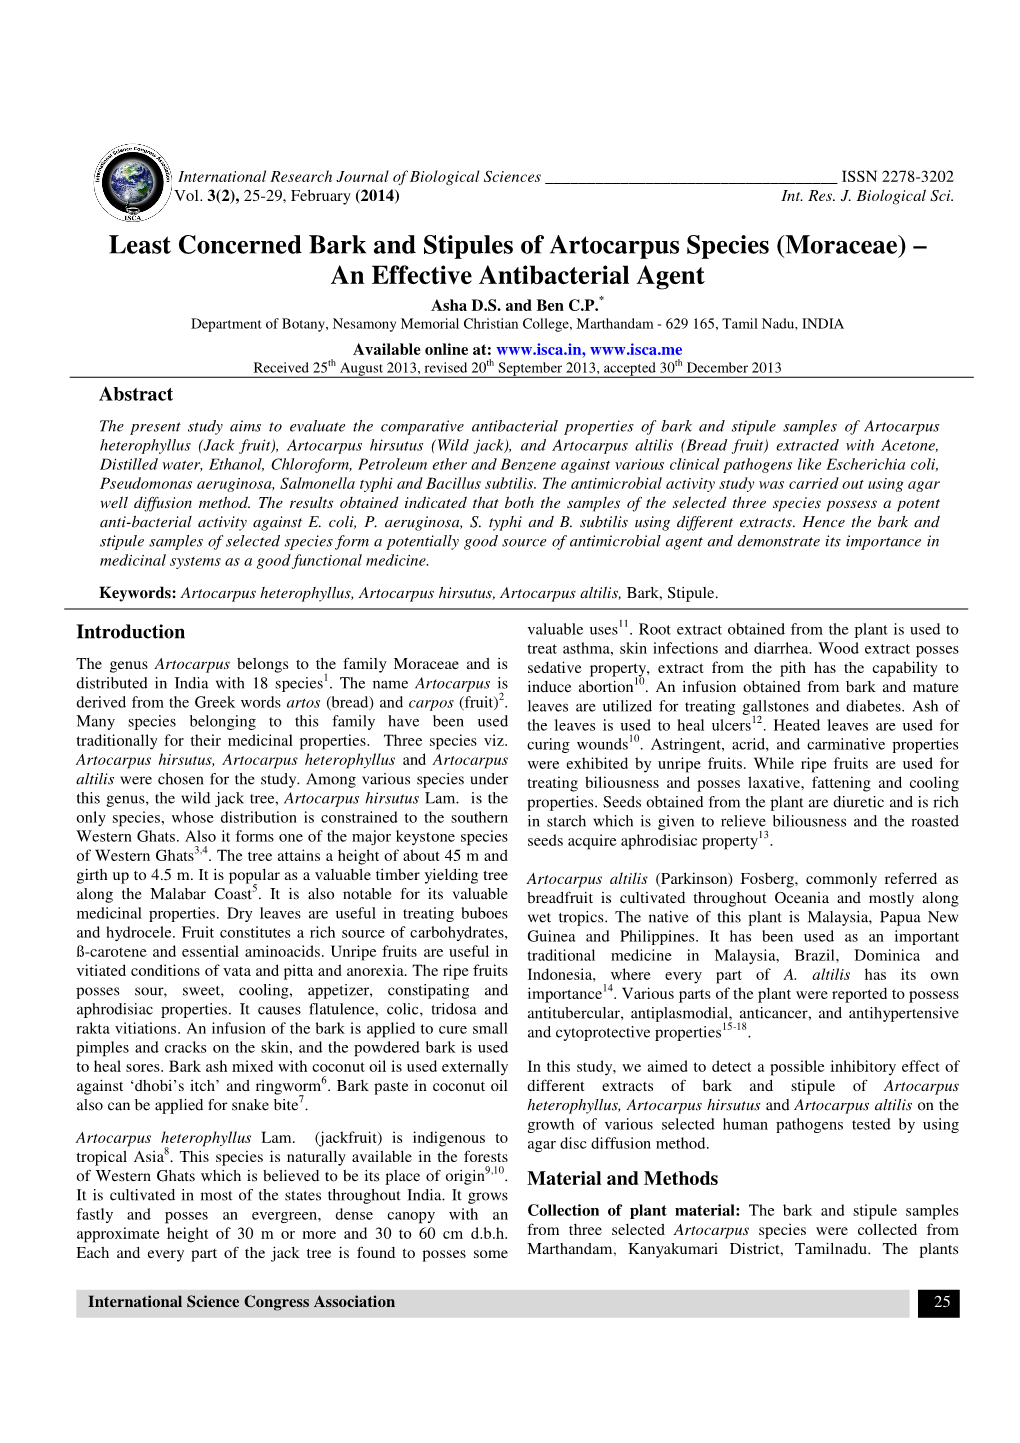 Least Concerned Bark and Stipules of Artocarpus Species (Moraceae) – an Effective Antibacterial Agent